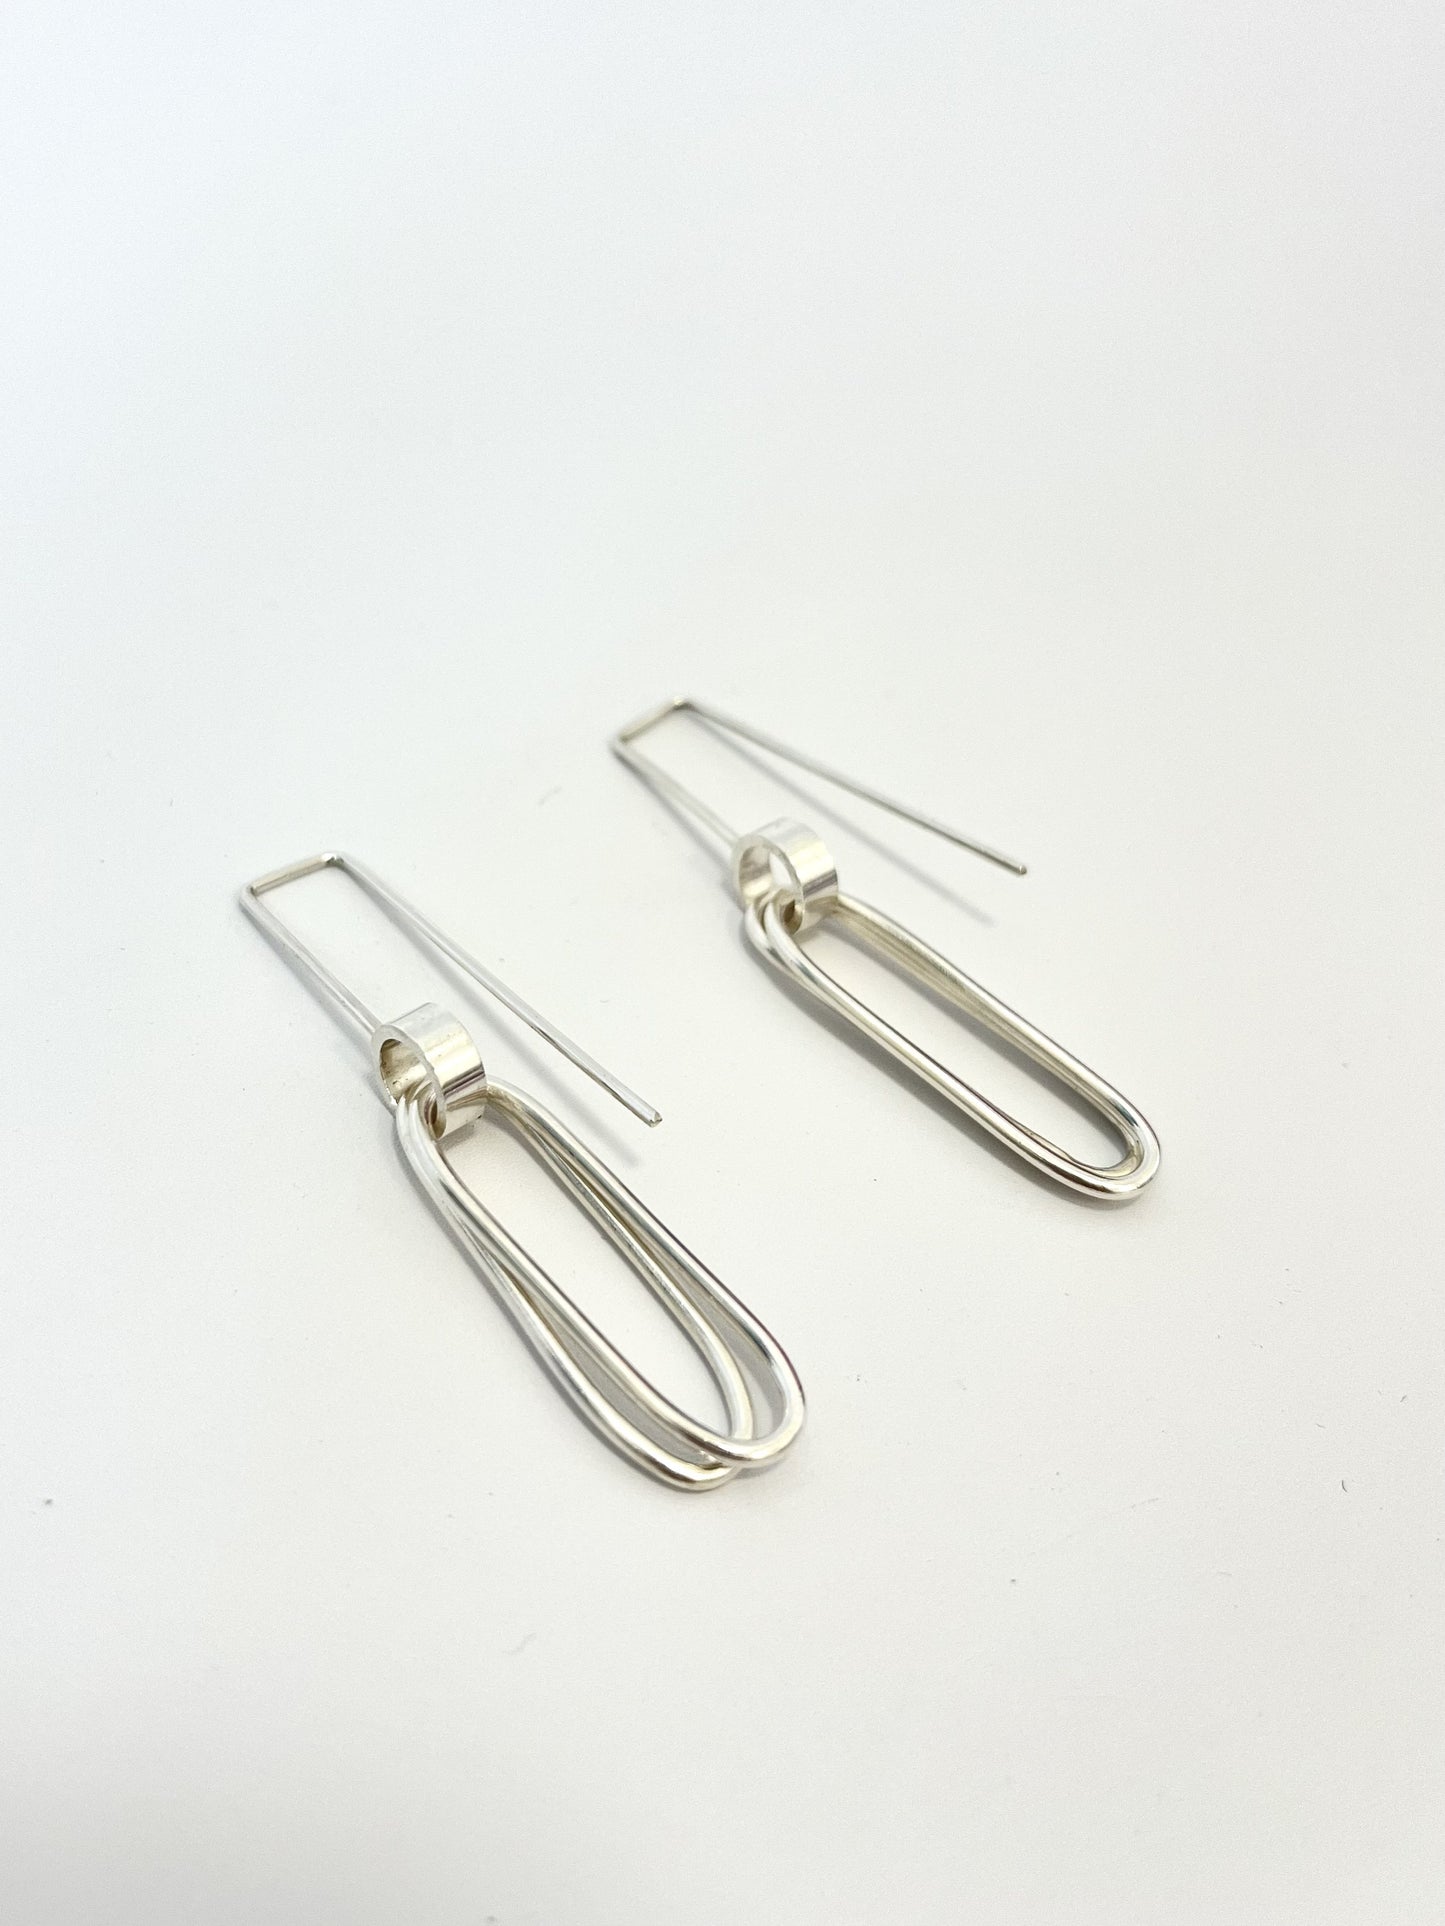 Silver Double Oblong Earrings with Hoops